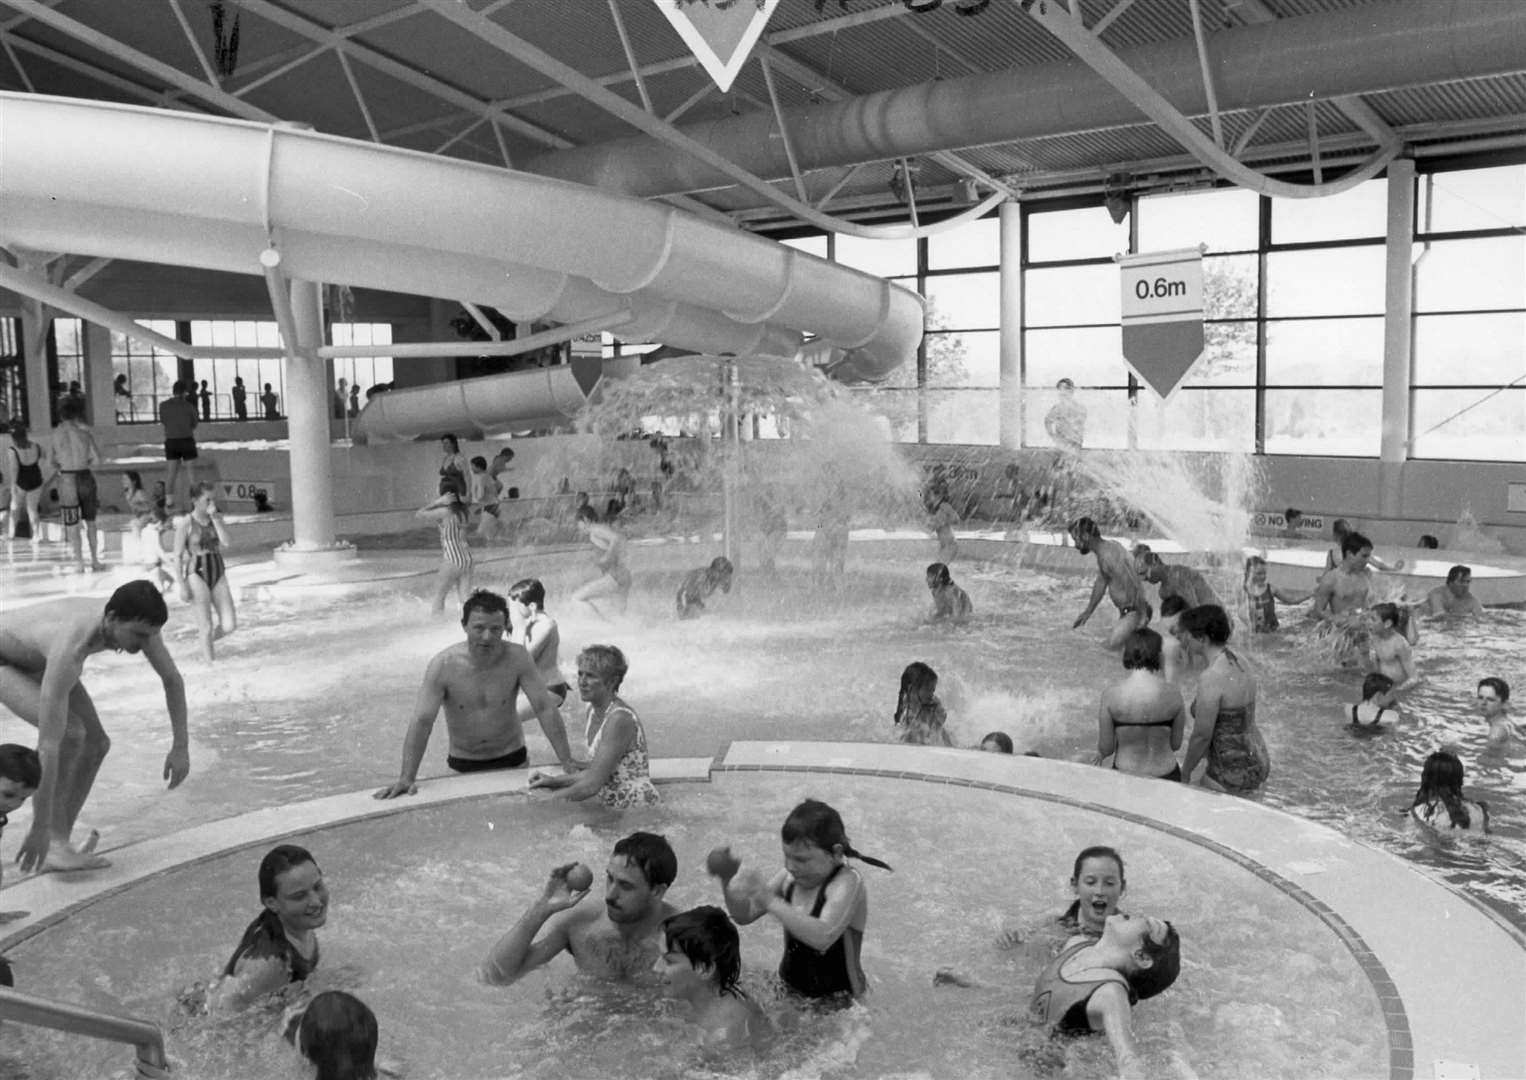 The Leisure Centre in Mote Park, Maidstone pictured in 1991